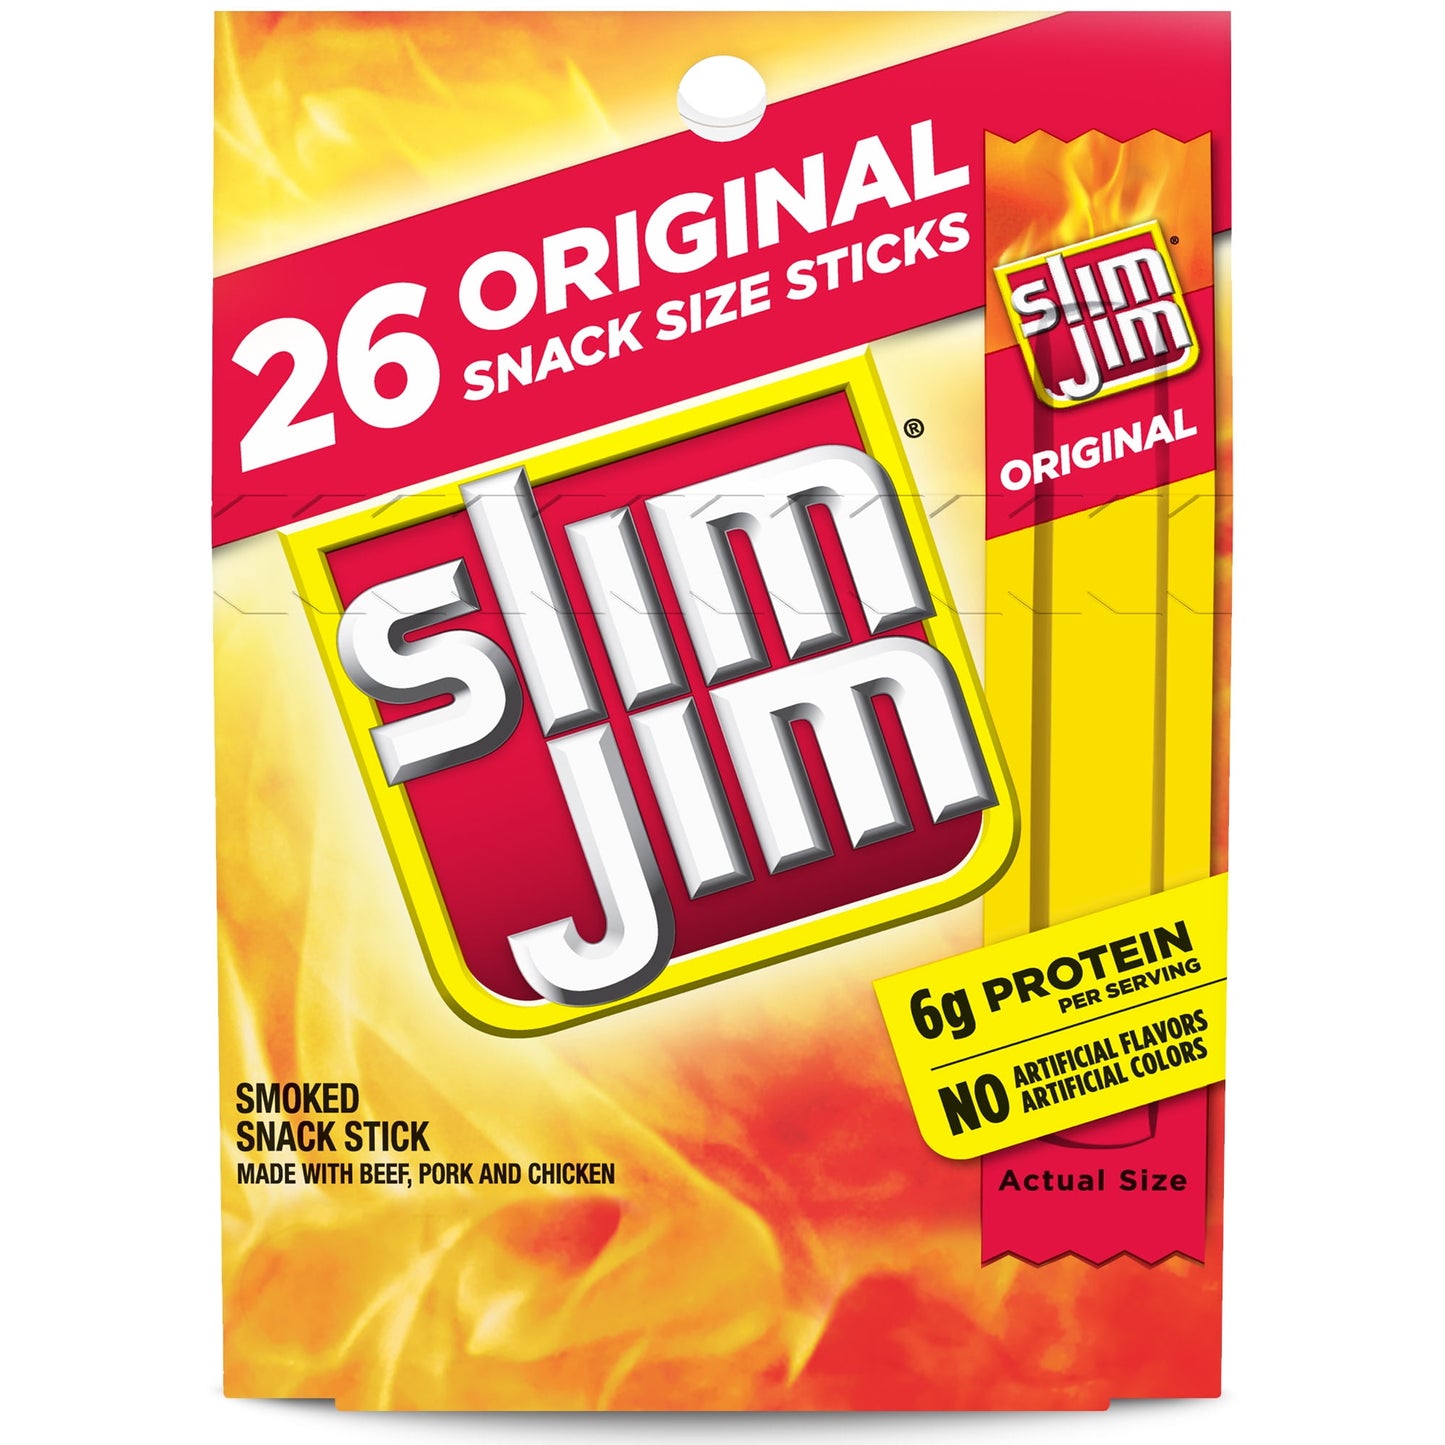 Slim Jim Original Snack Size Stick, 0.28 oz Meat Snacks, 26 Count Box